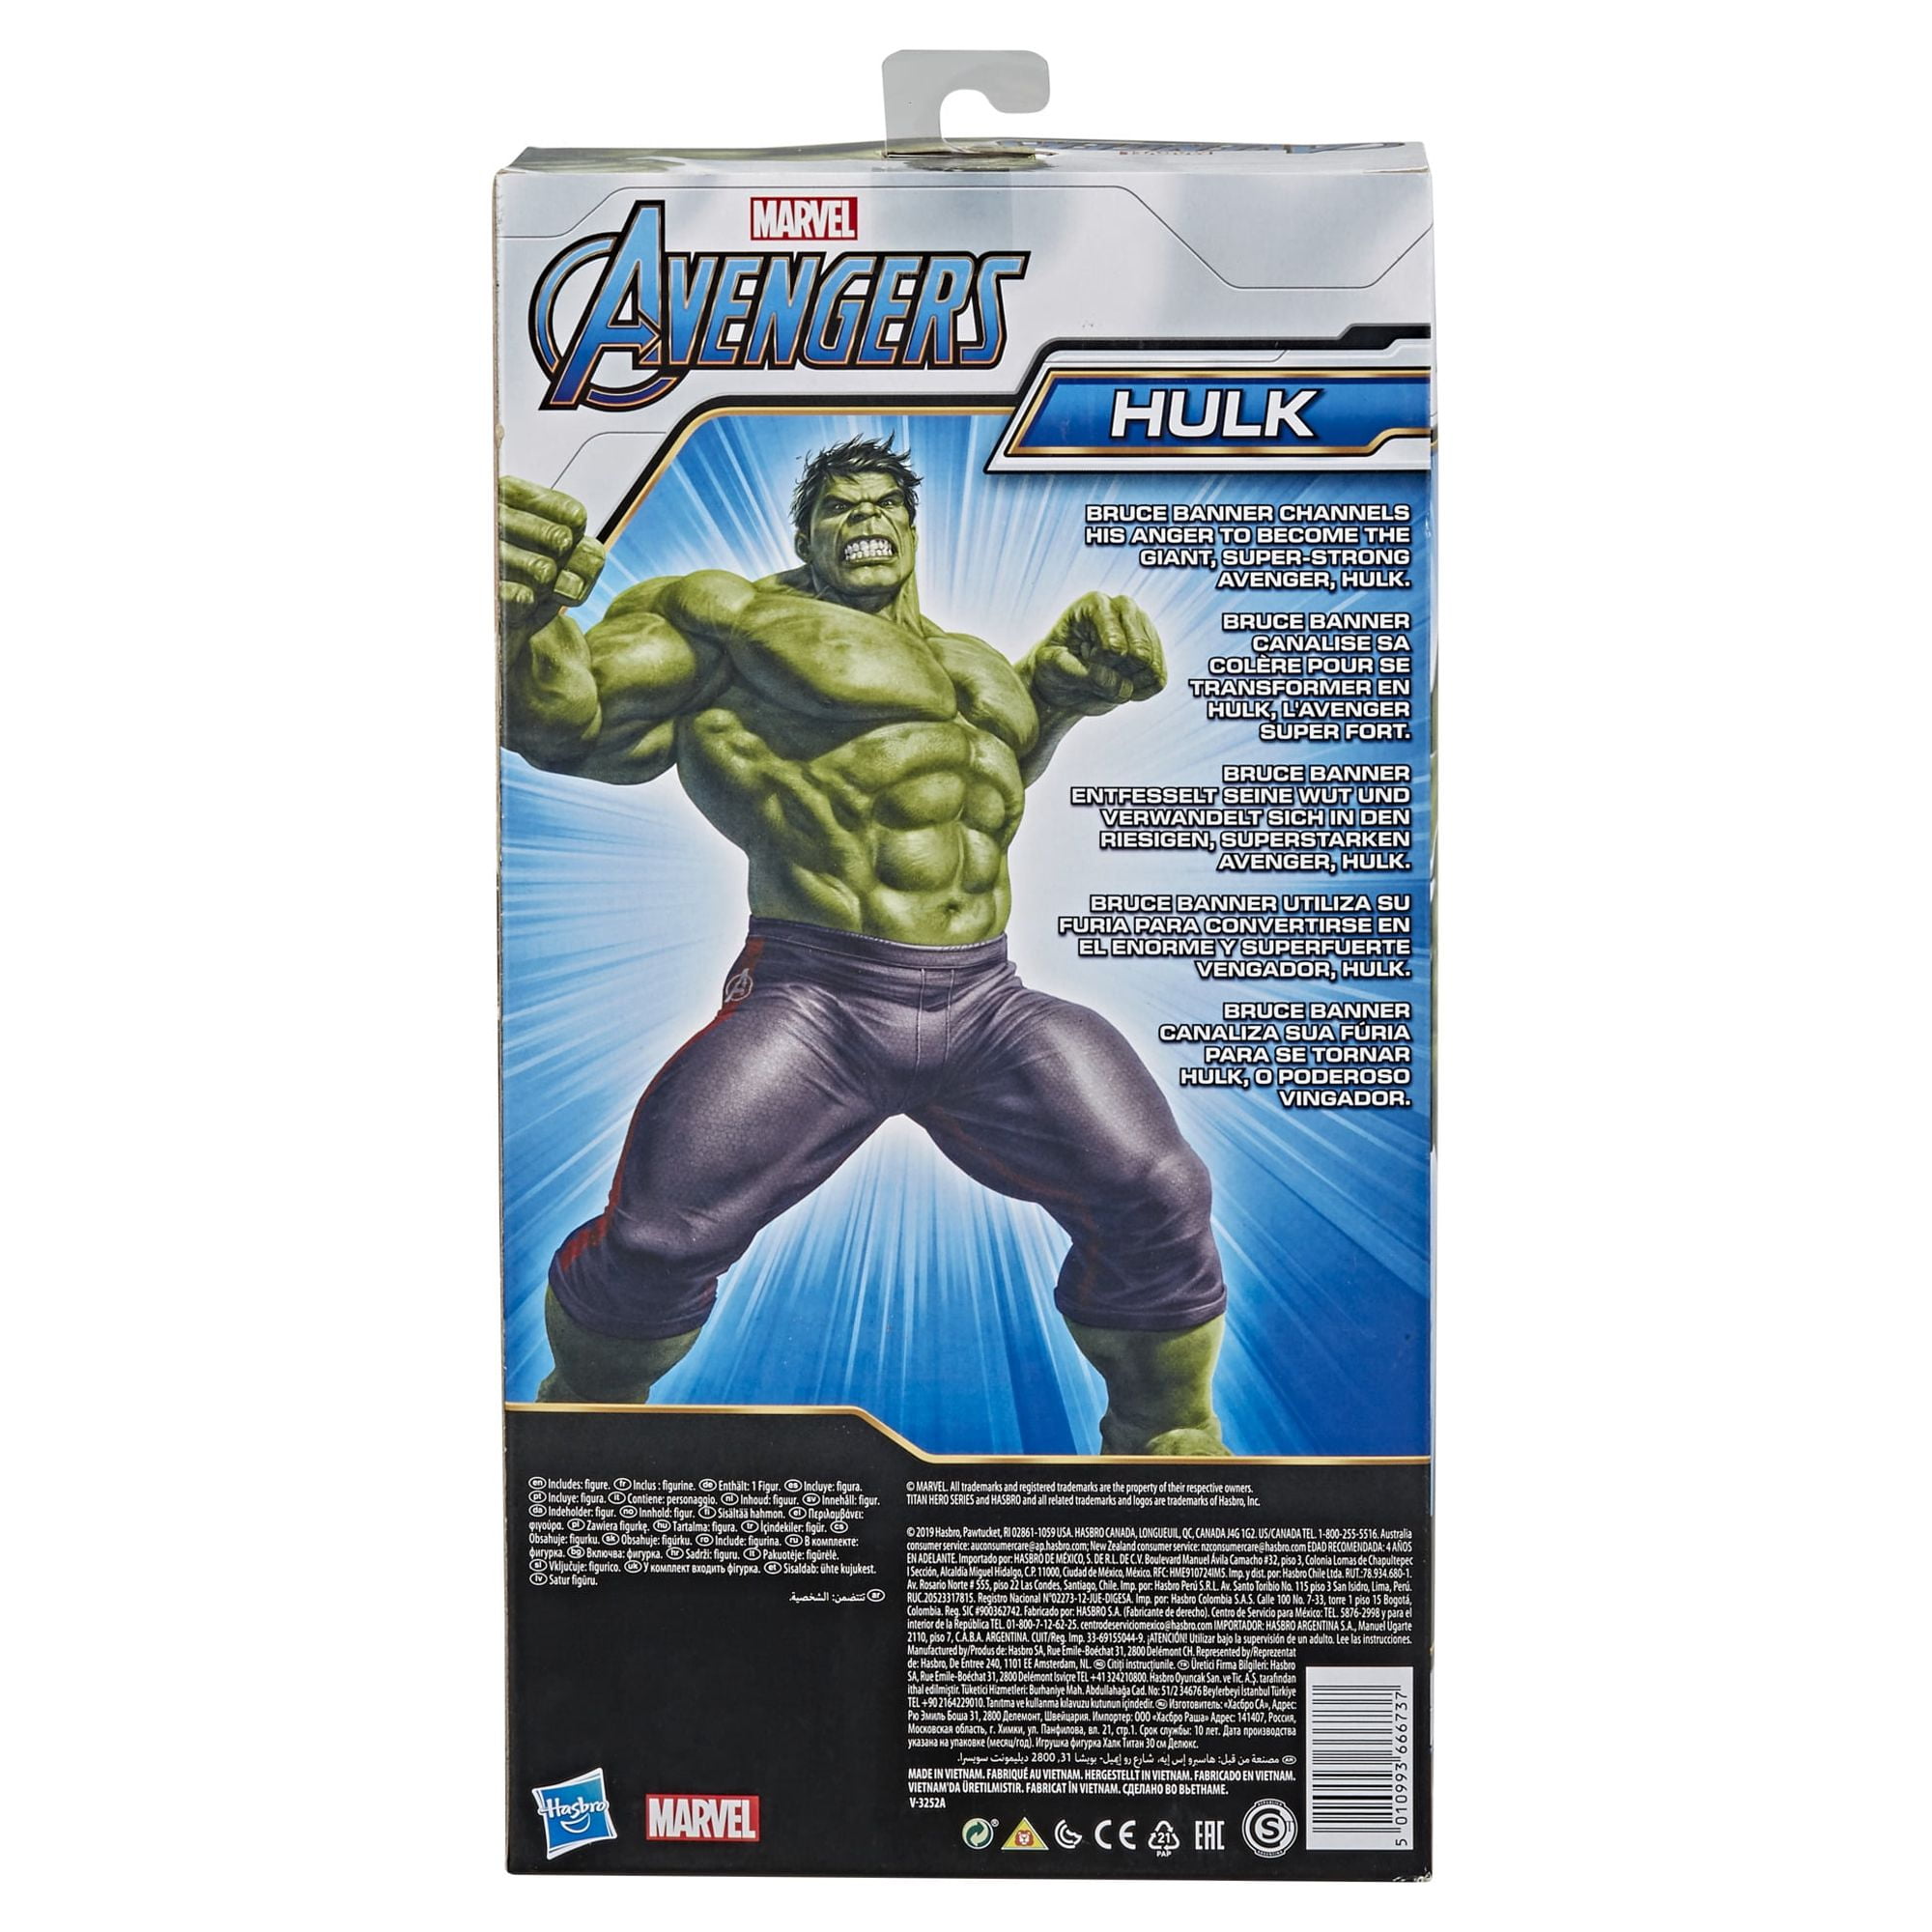 Marvel Avengers Titan Hero Series Blast Gear Deluxe Hulk Action Figure,  30-cm Toy, Inspired byMarvel Comics, for Children Aged 4 and Up,Green